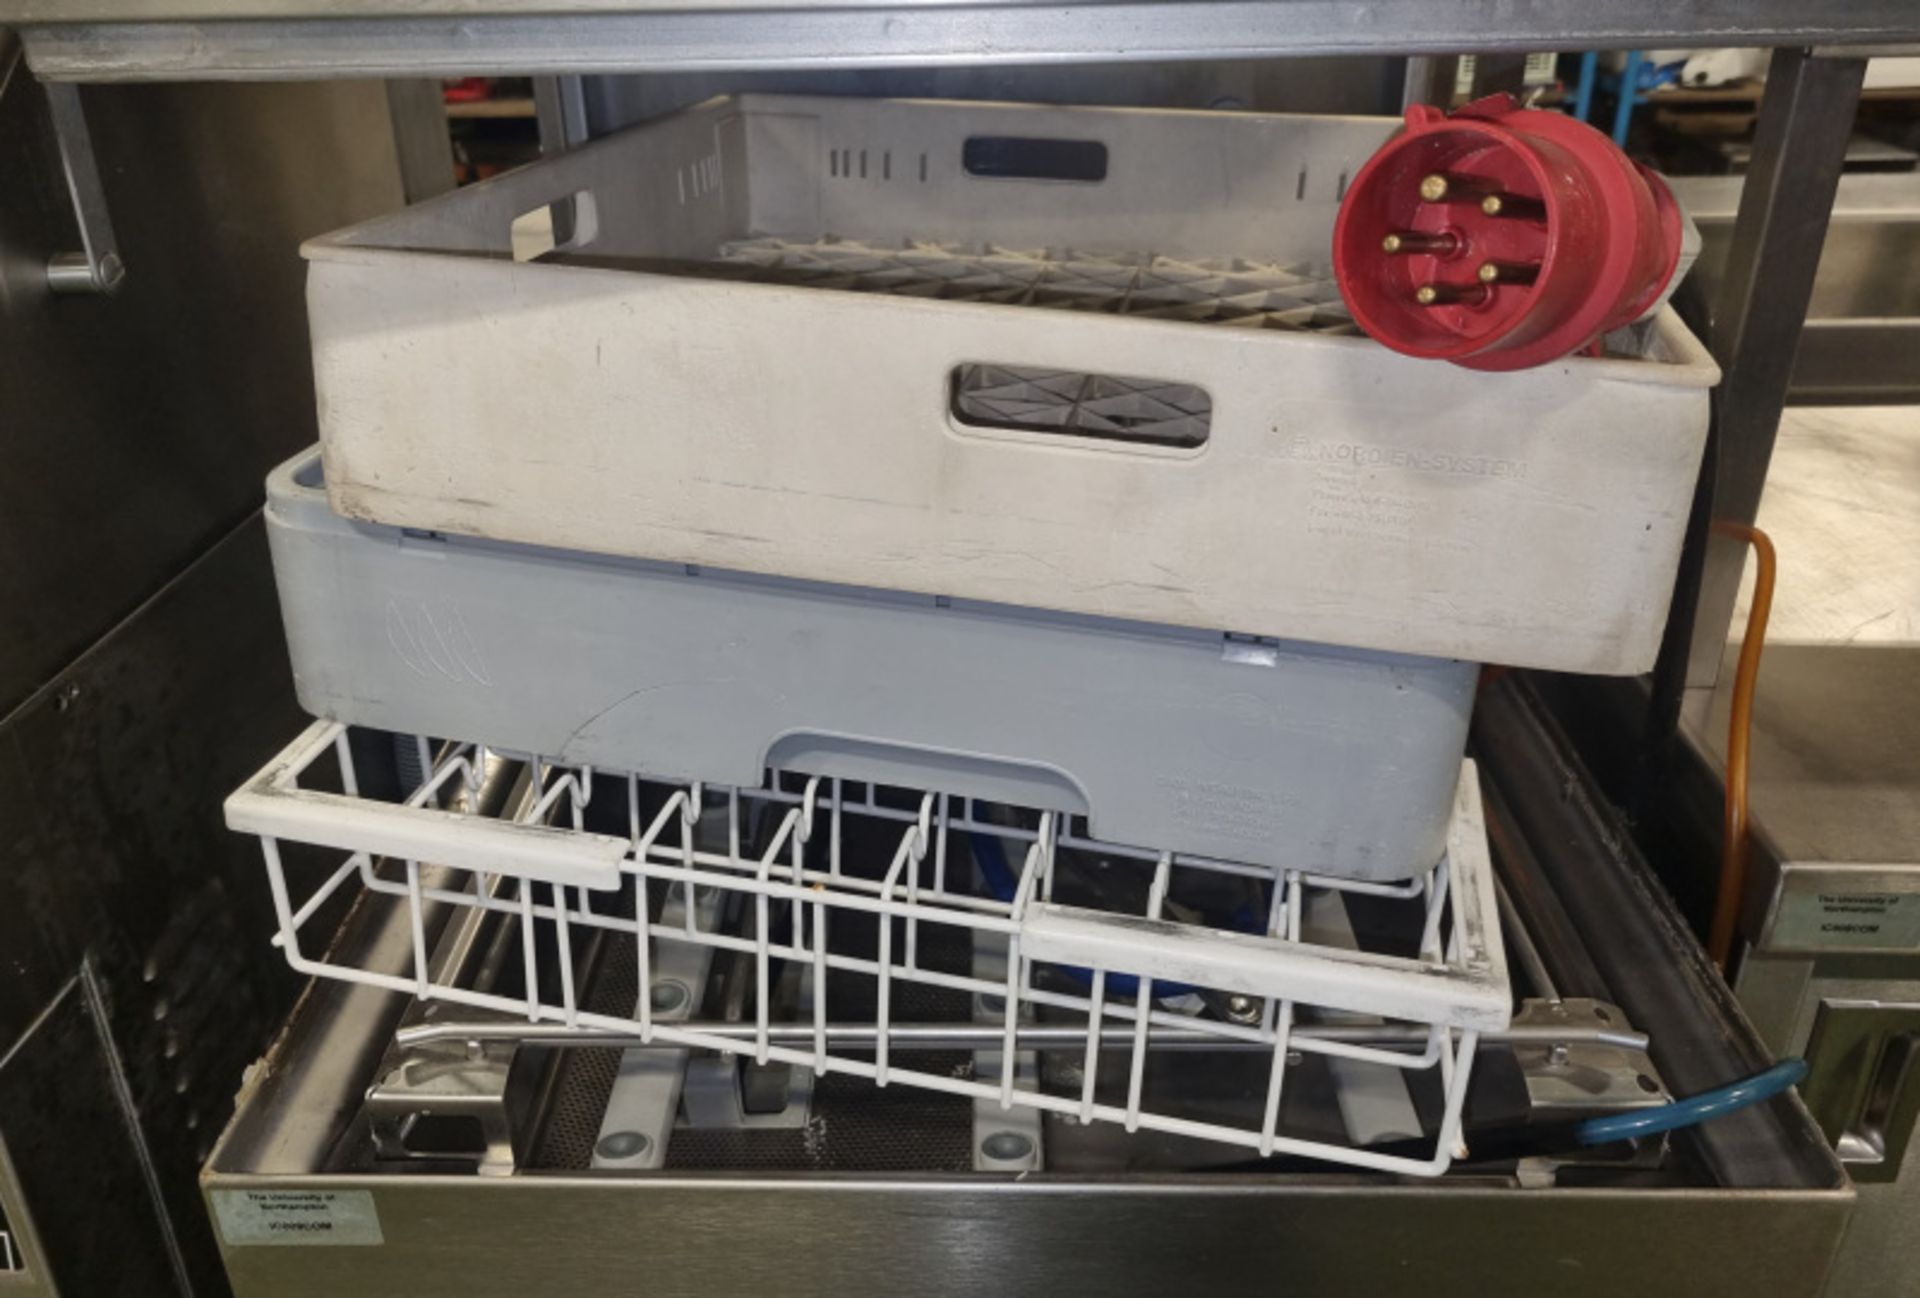 Winterhalter GS 502 pass through dishwasher - L70 x D75 x H185 (open) - Image 3 of 4